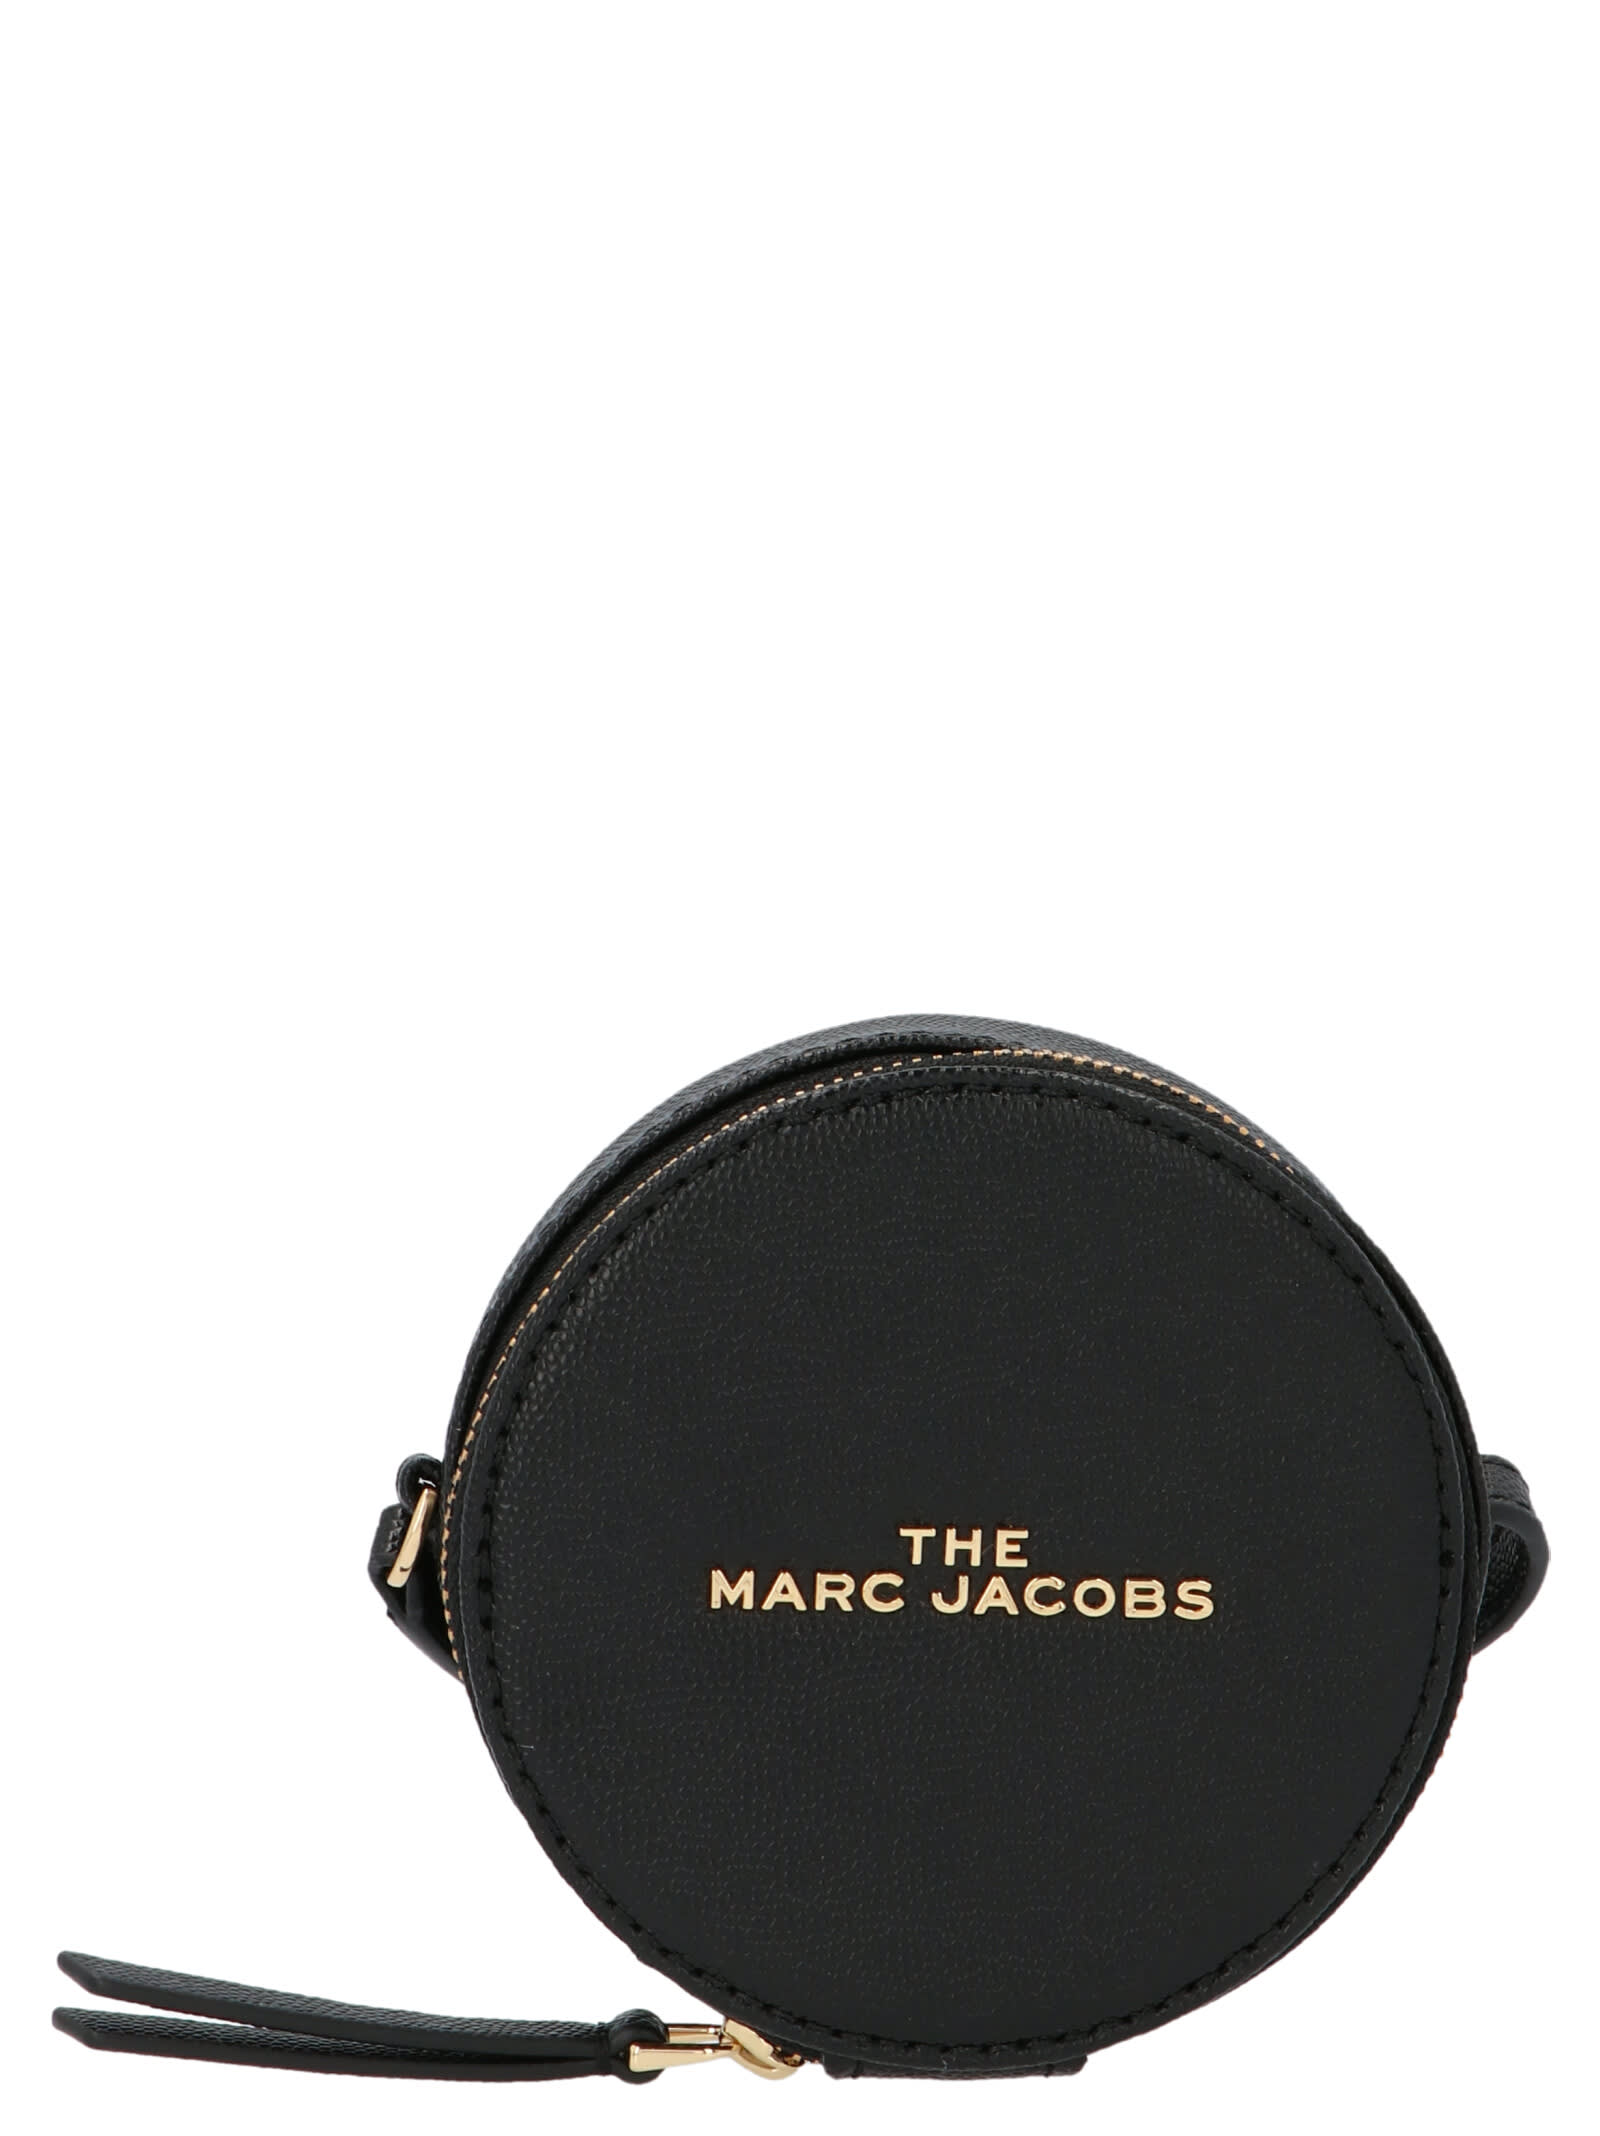 Cross body bags Marc Jacobs - The Hot Spot semi-circular bag